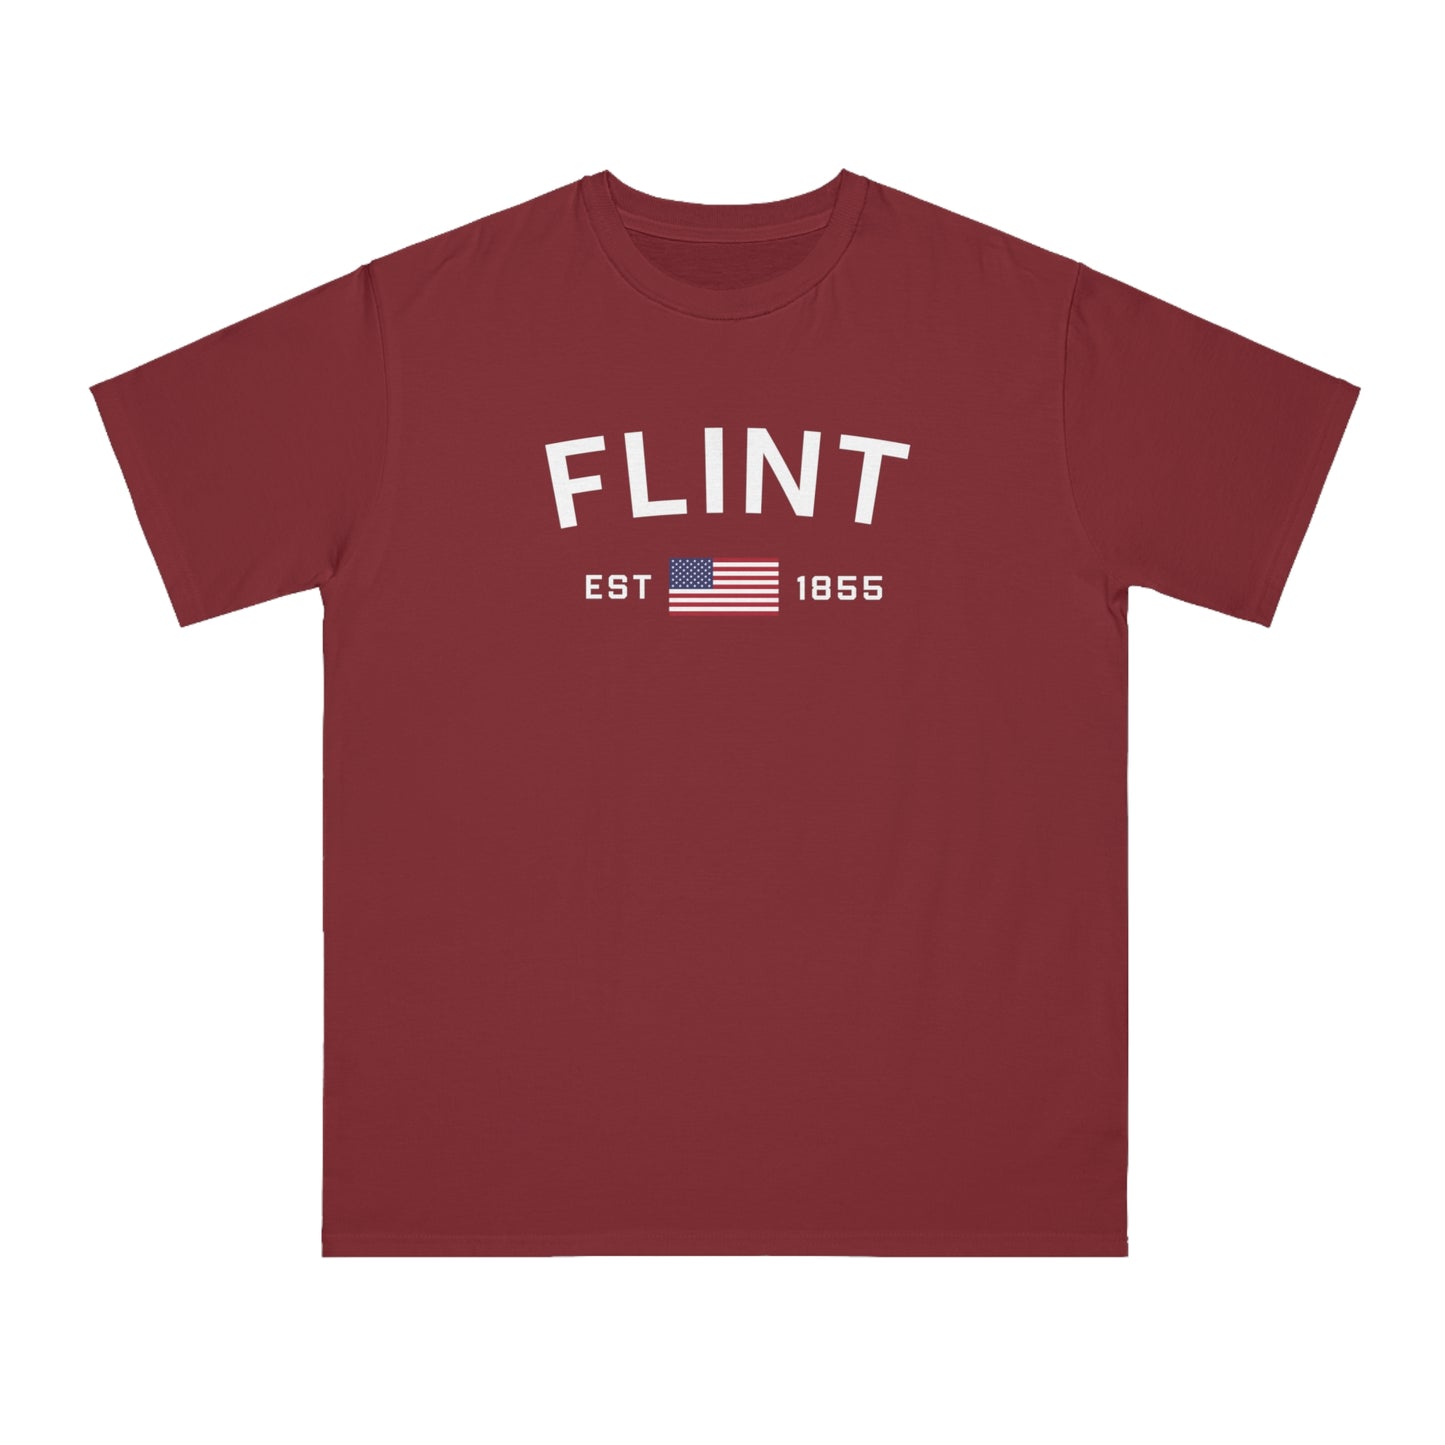 'Flint EST 1855' T-Shirt (w/USA Flag) | Unisex Organic